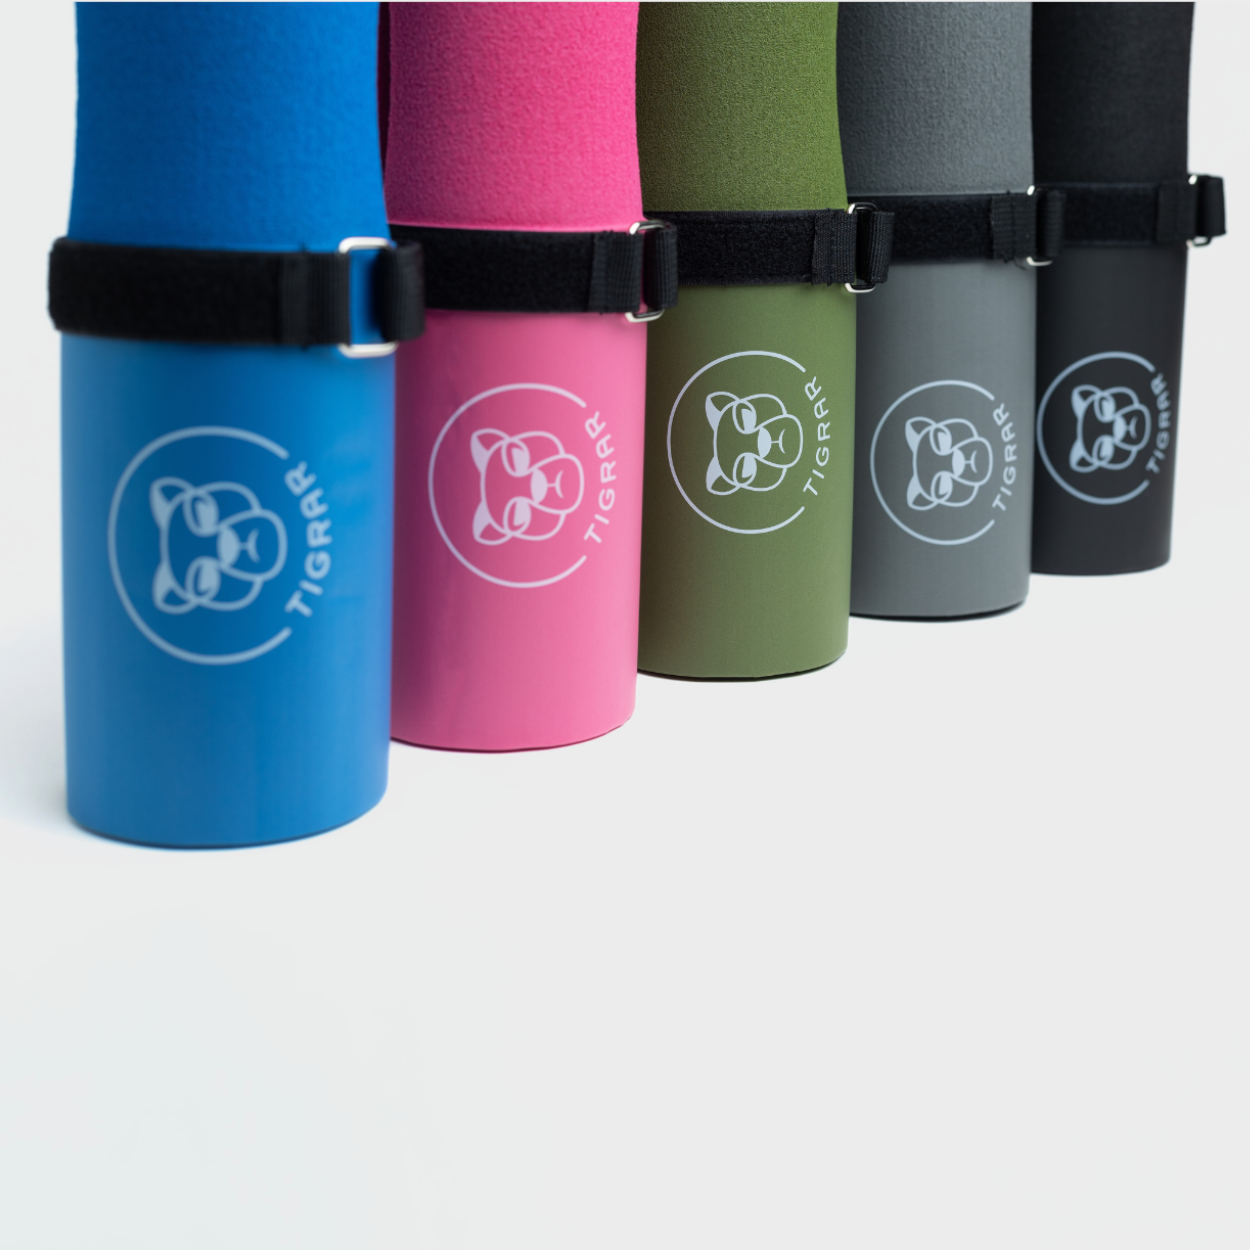 5 kleuren barbell protection pads